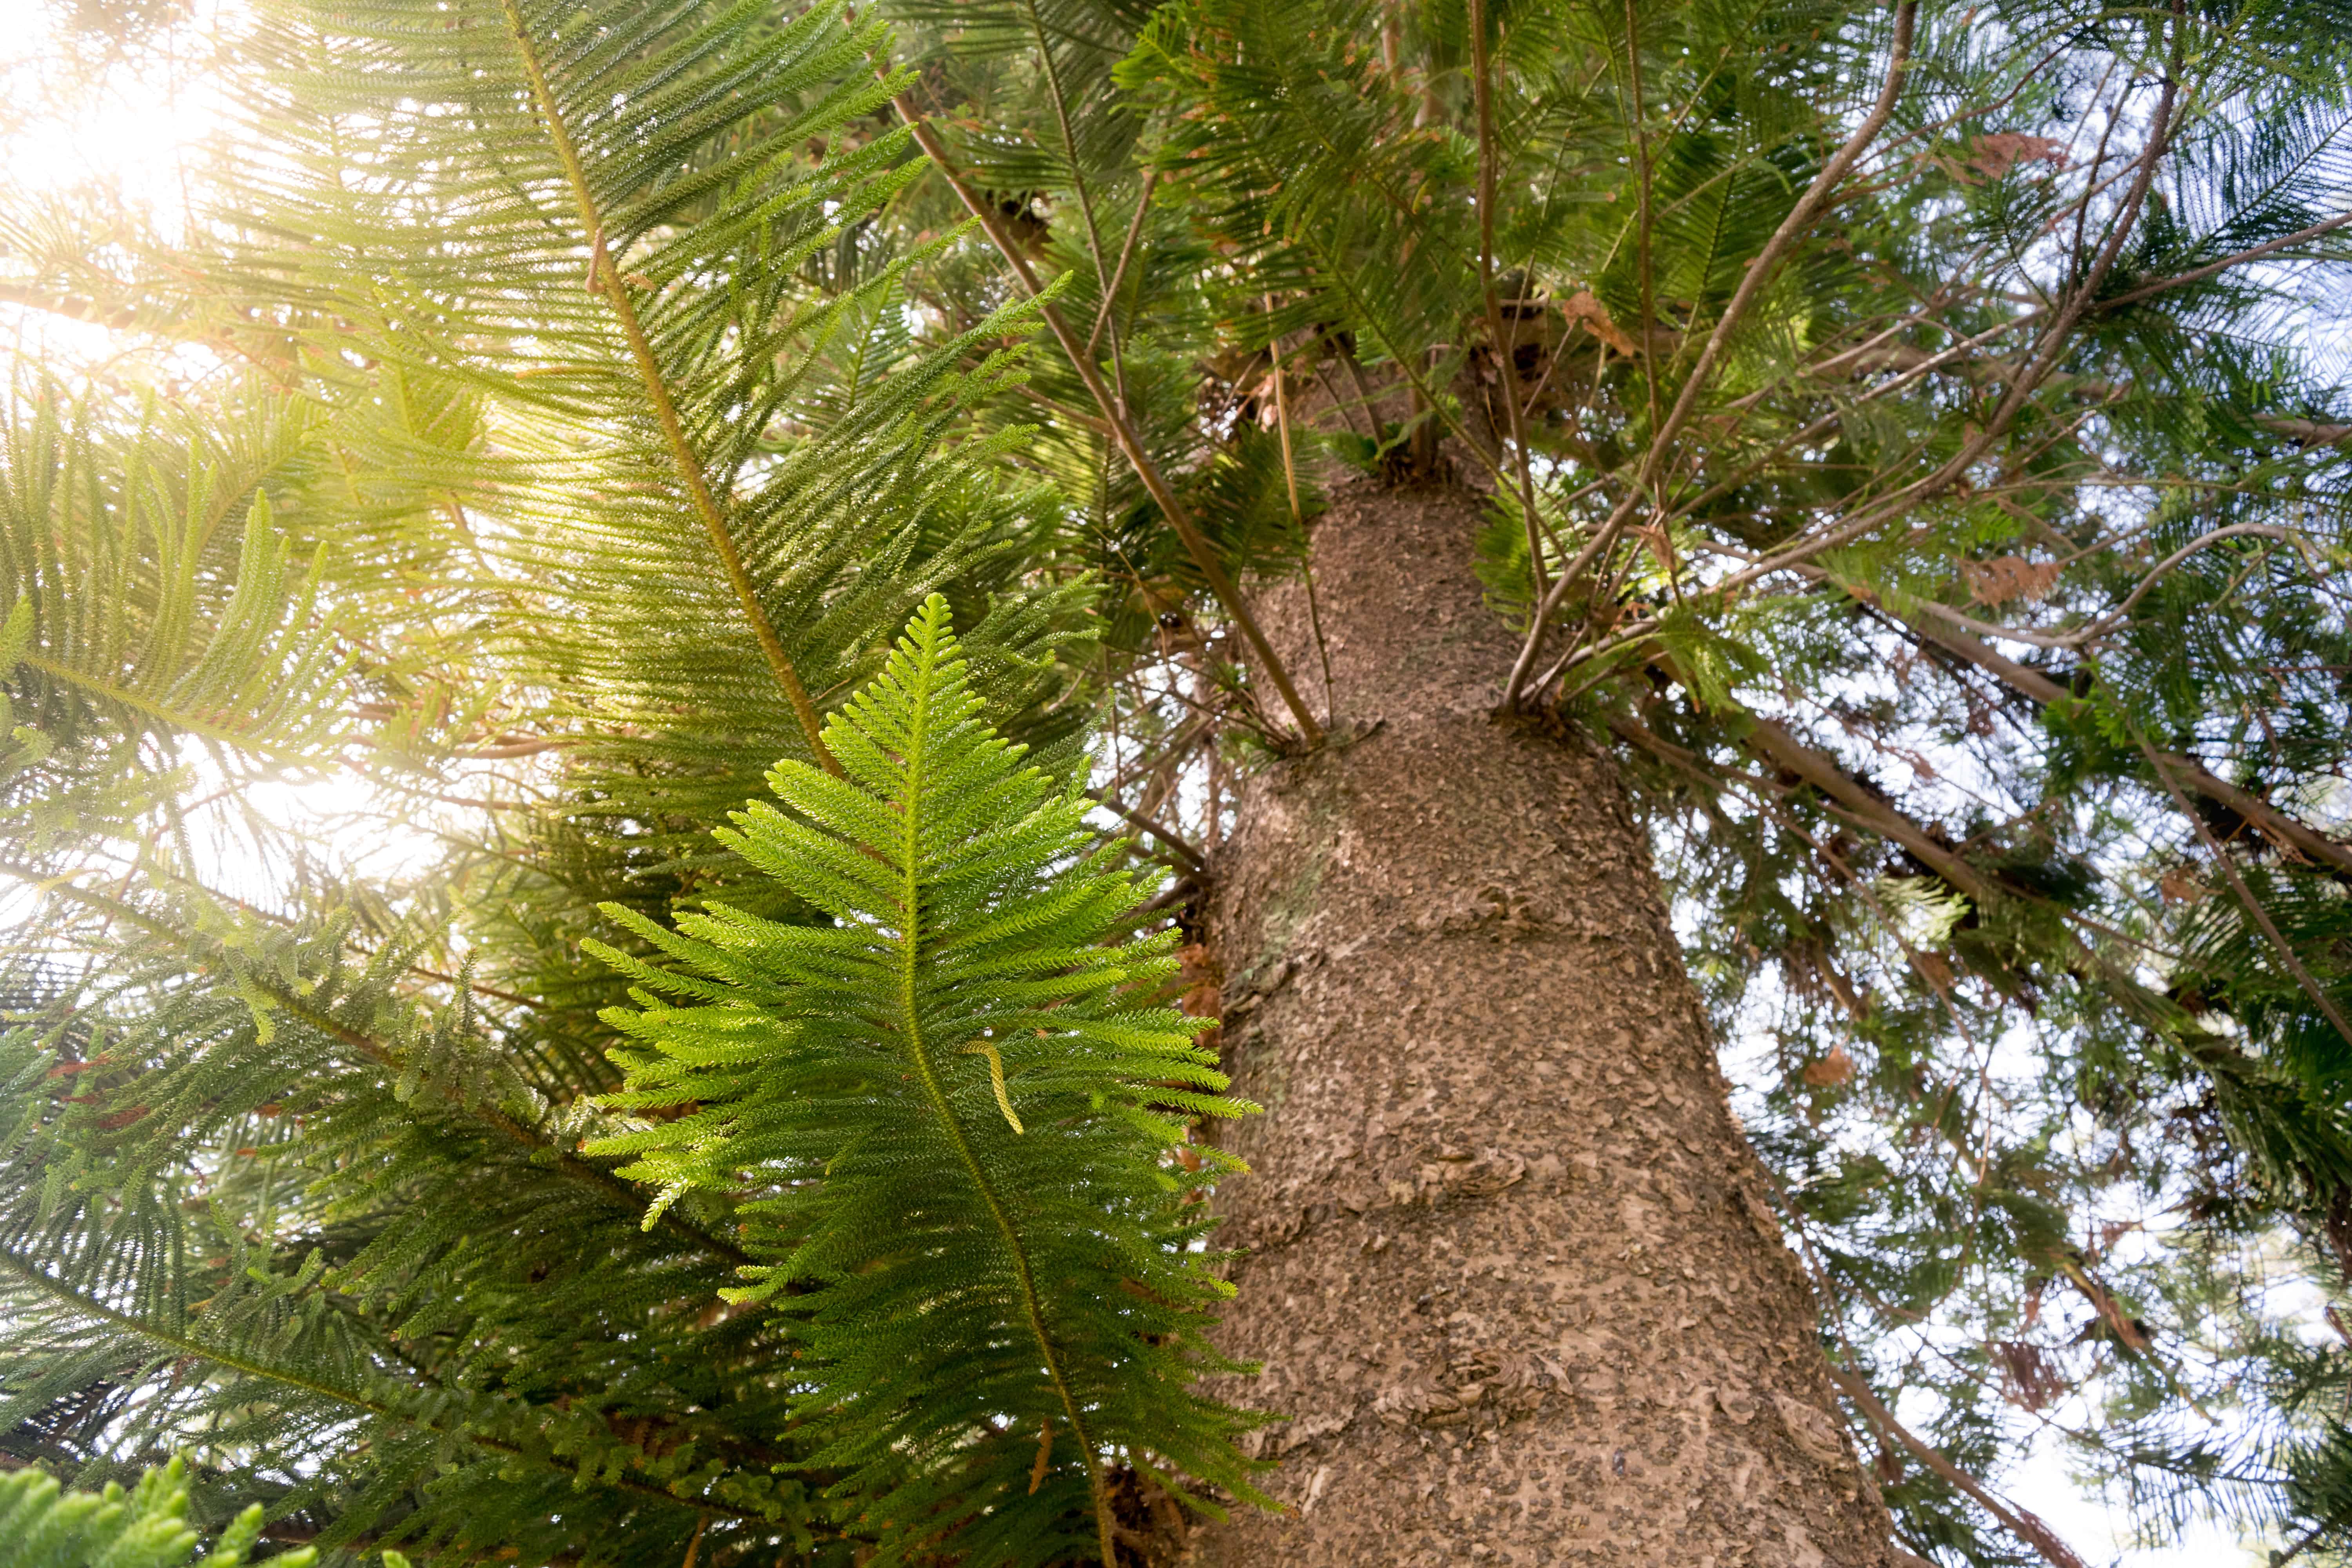 The Norfolk Island Pine tree on Coronado